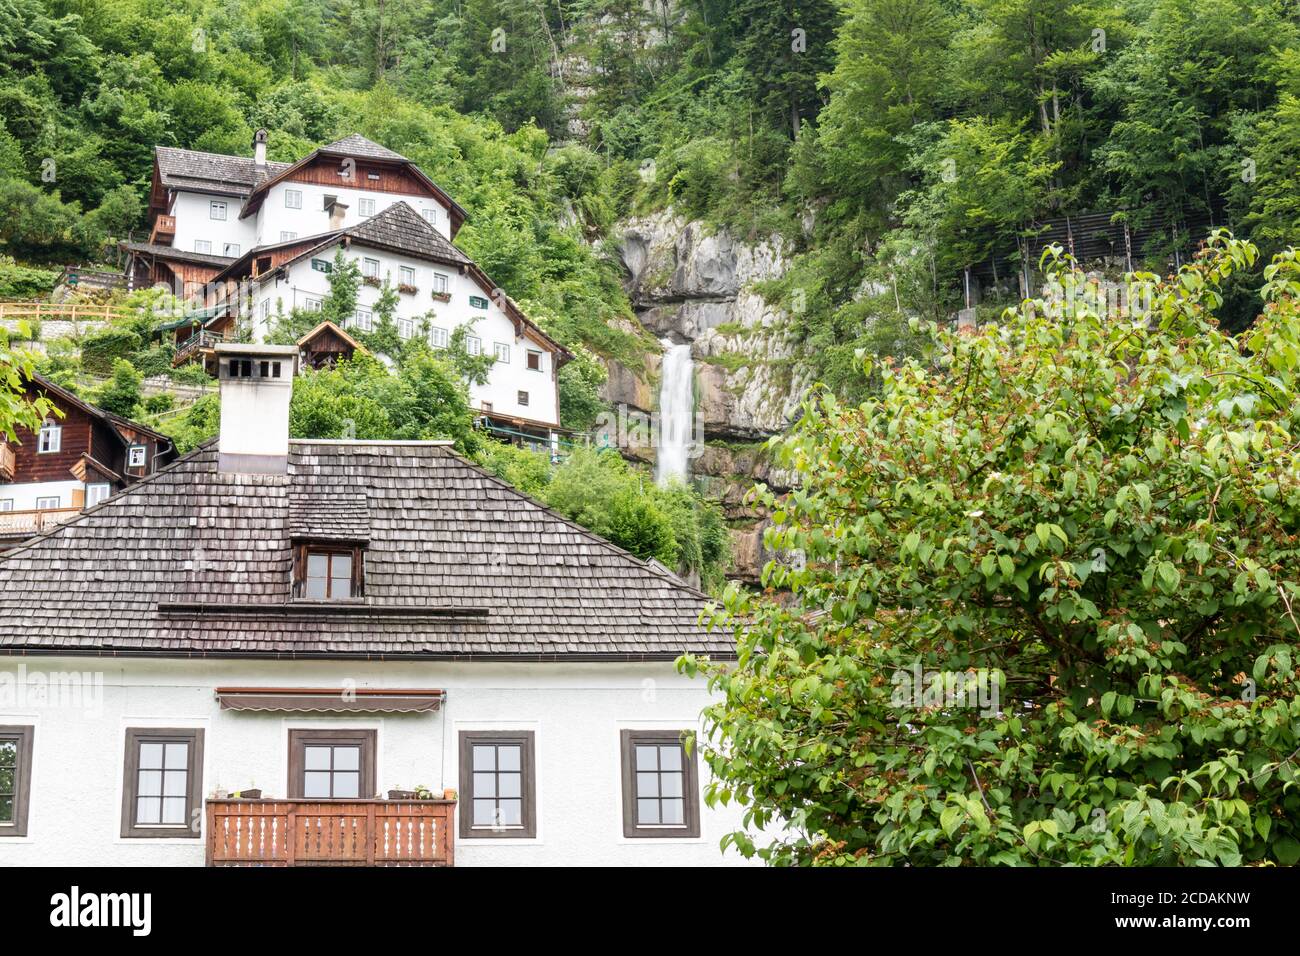 Hallstatt small town as postcard view on lake side in Austria Stock Photo